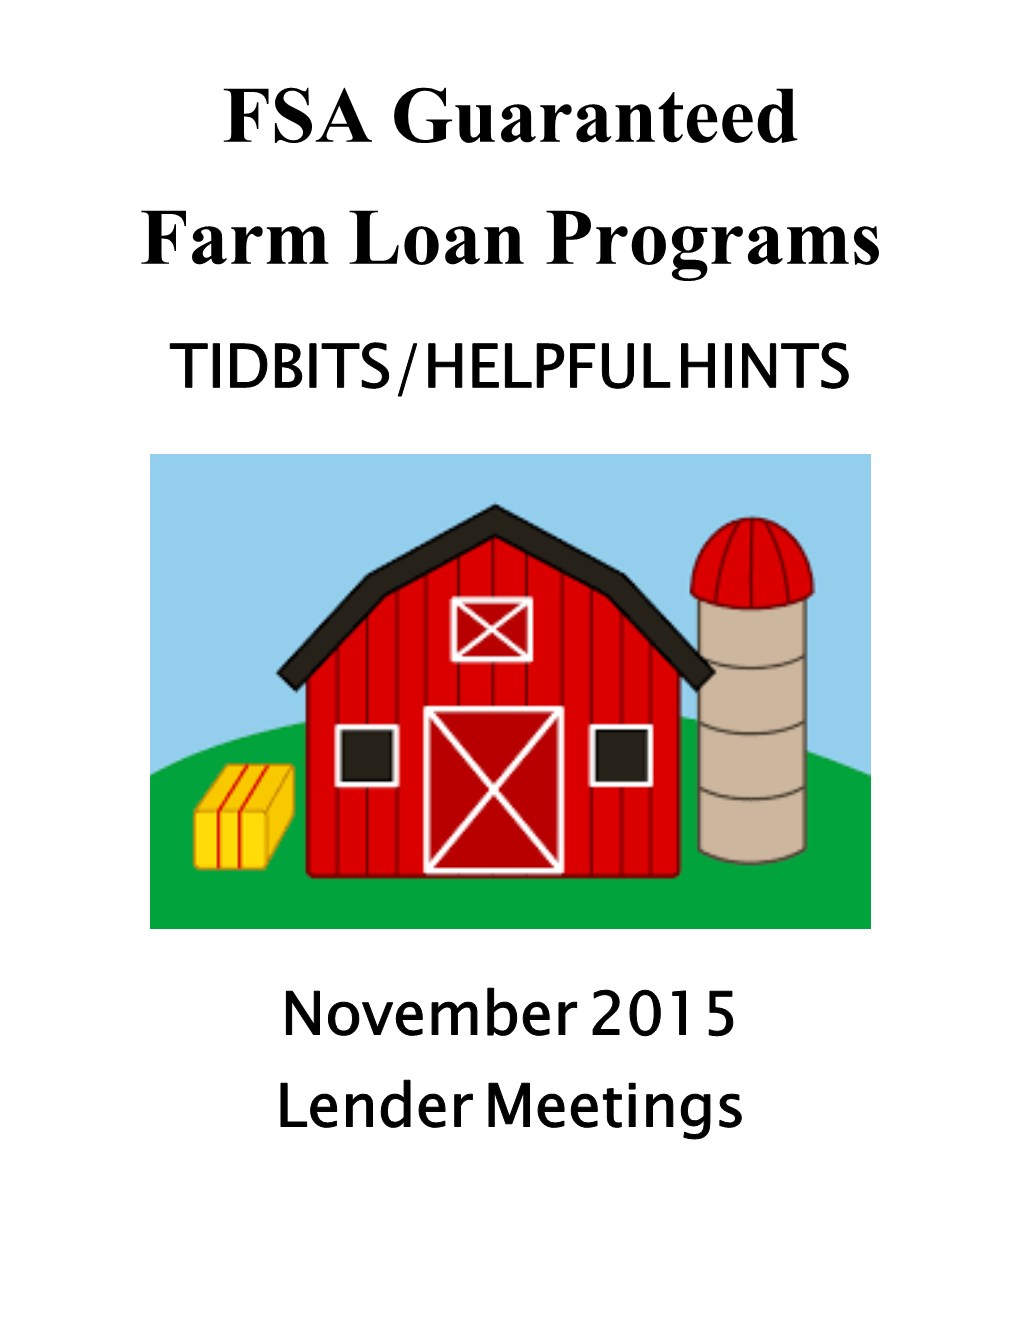 FSA Guaranteed Farm Loan Programs